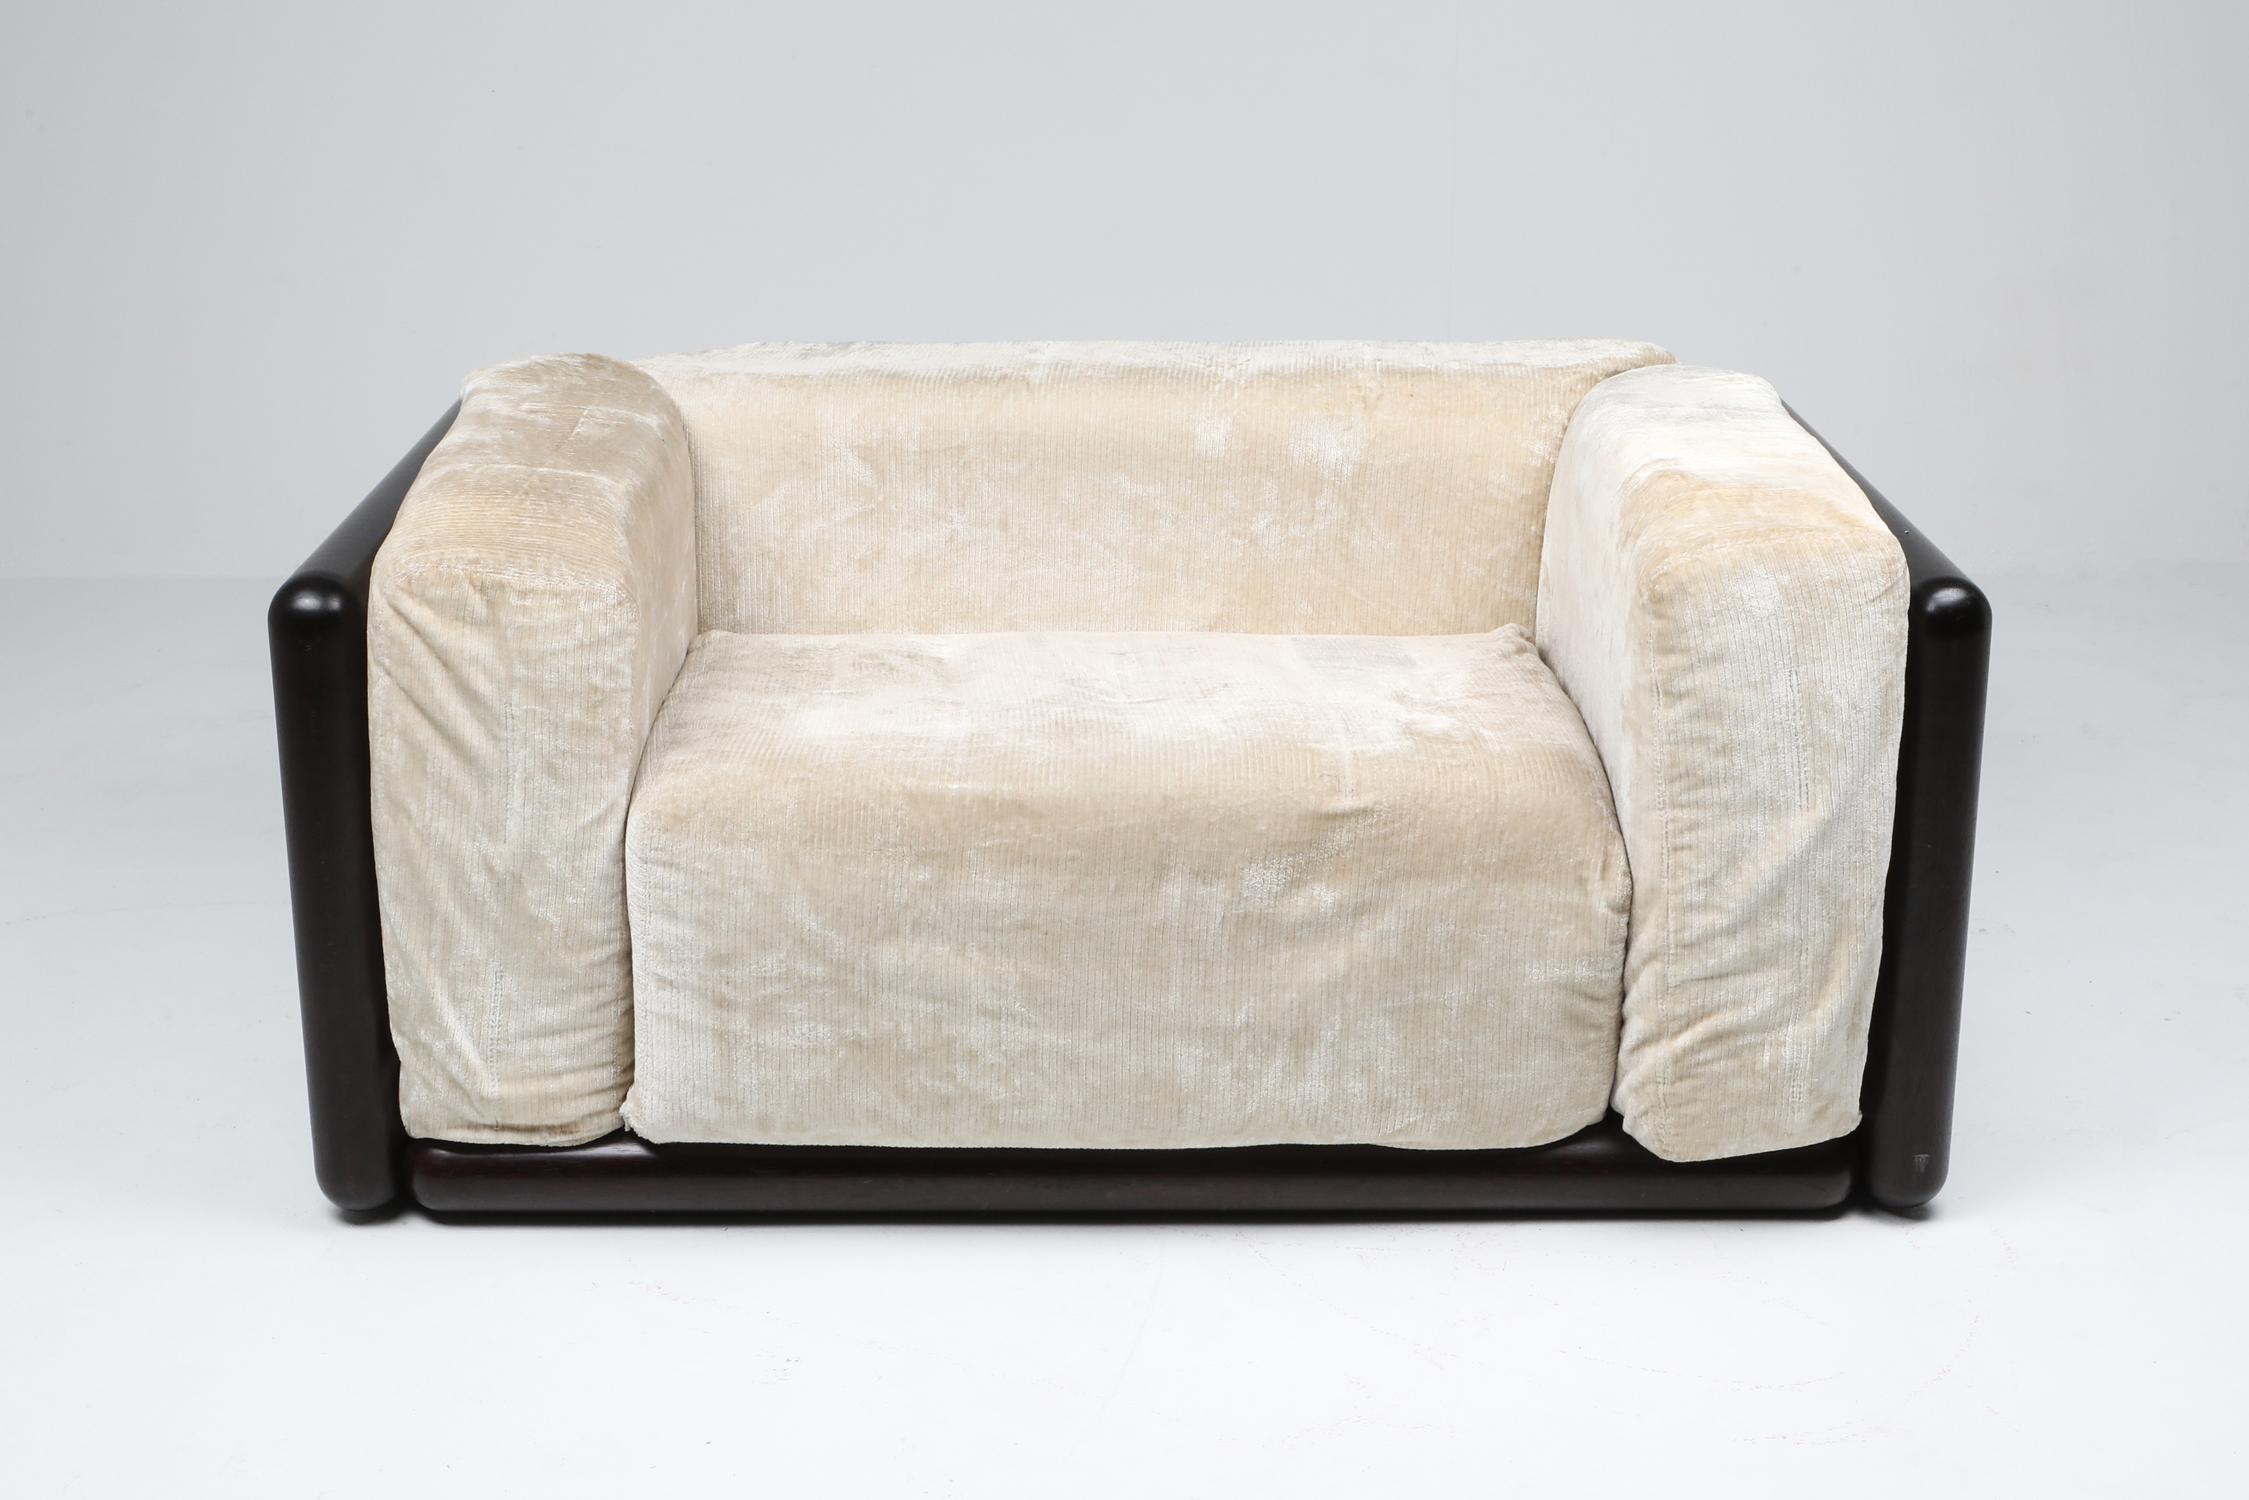 20th Century Carlo Scarpa 'Cornaro' Lounge Chair for Simon, 1973